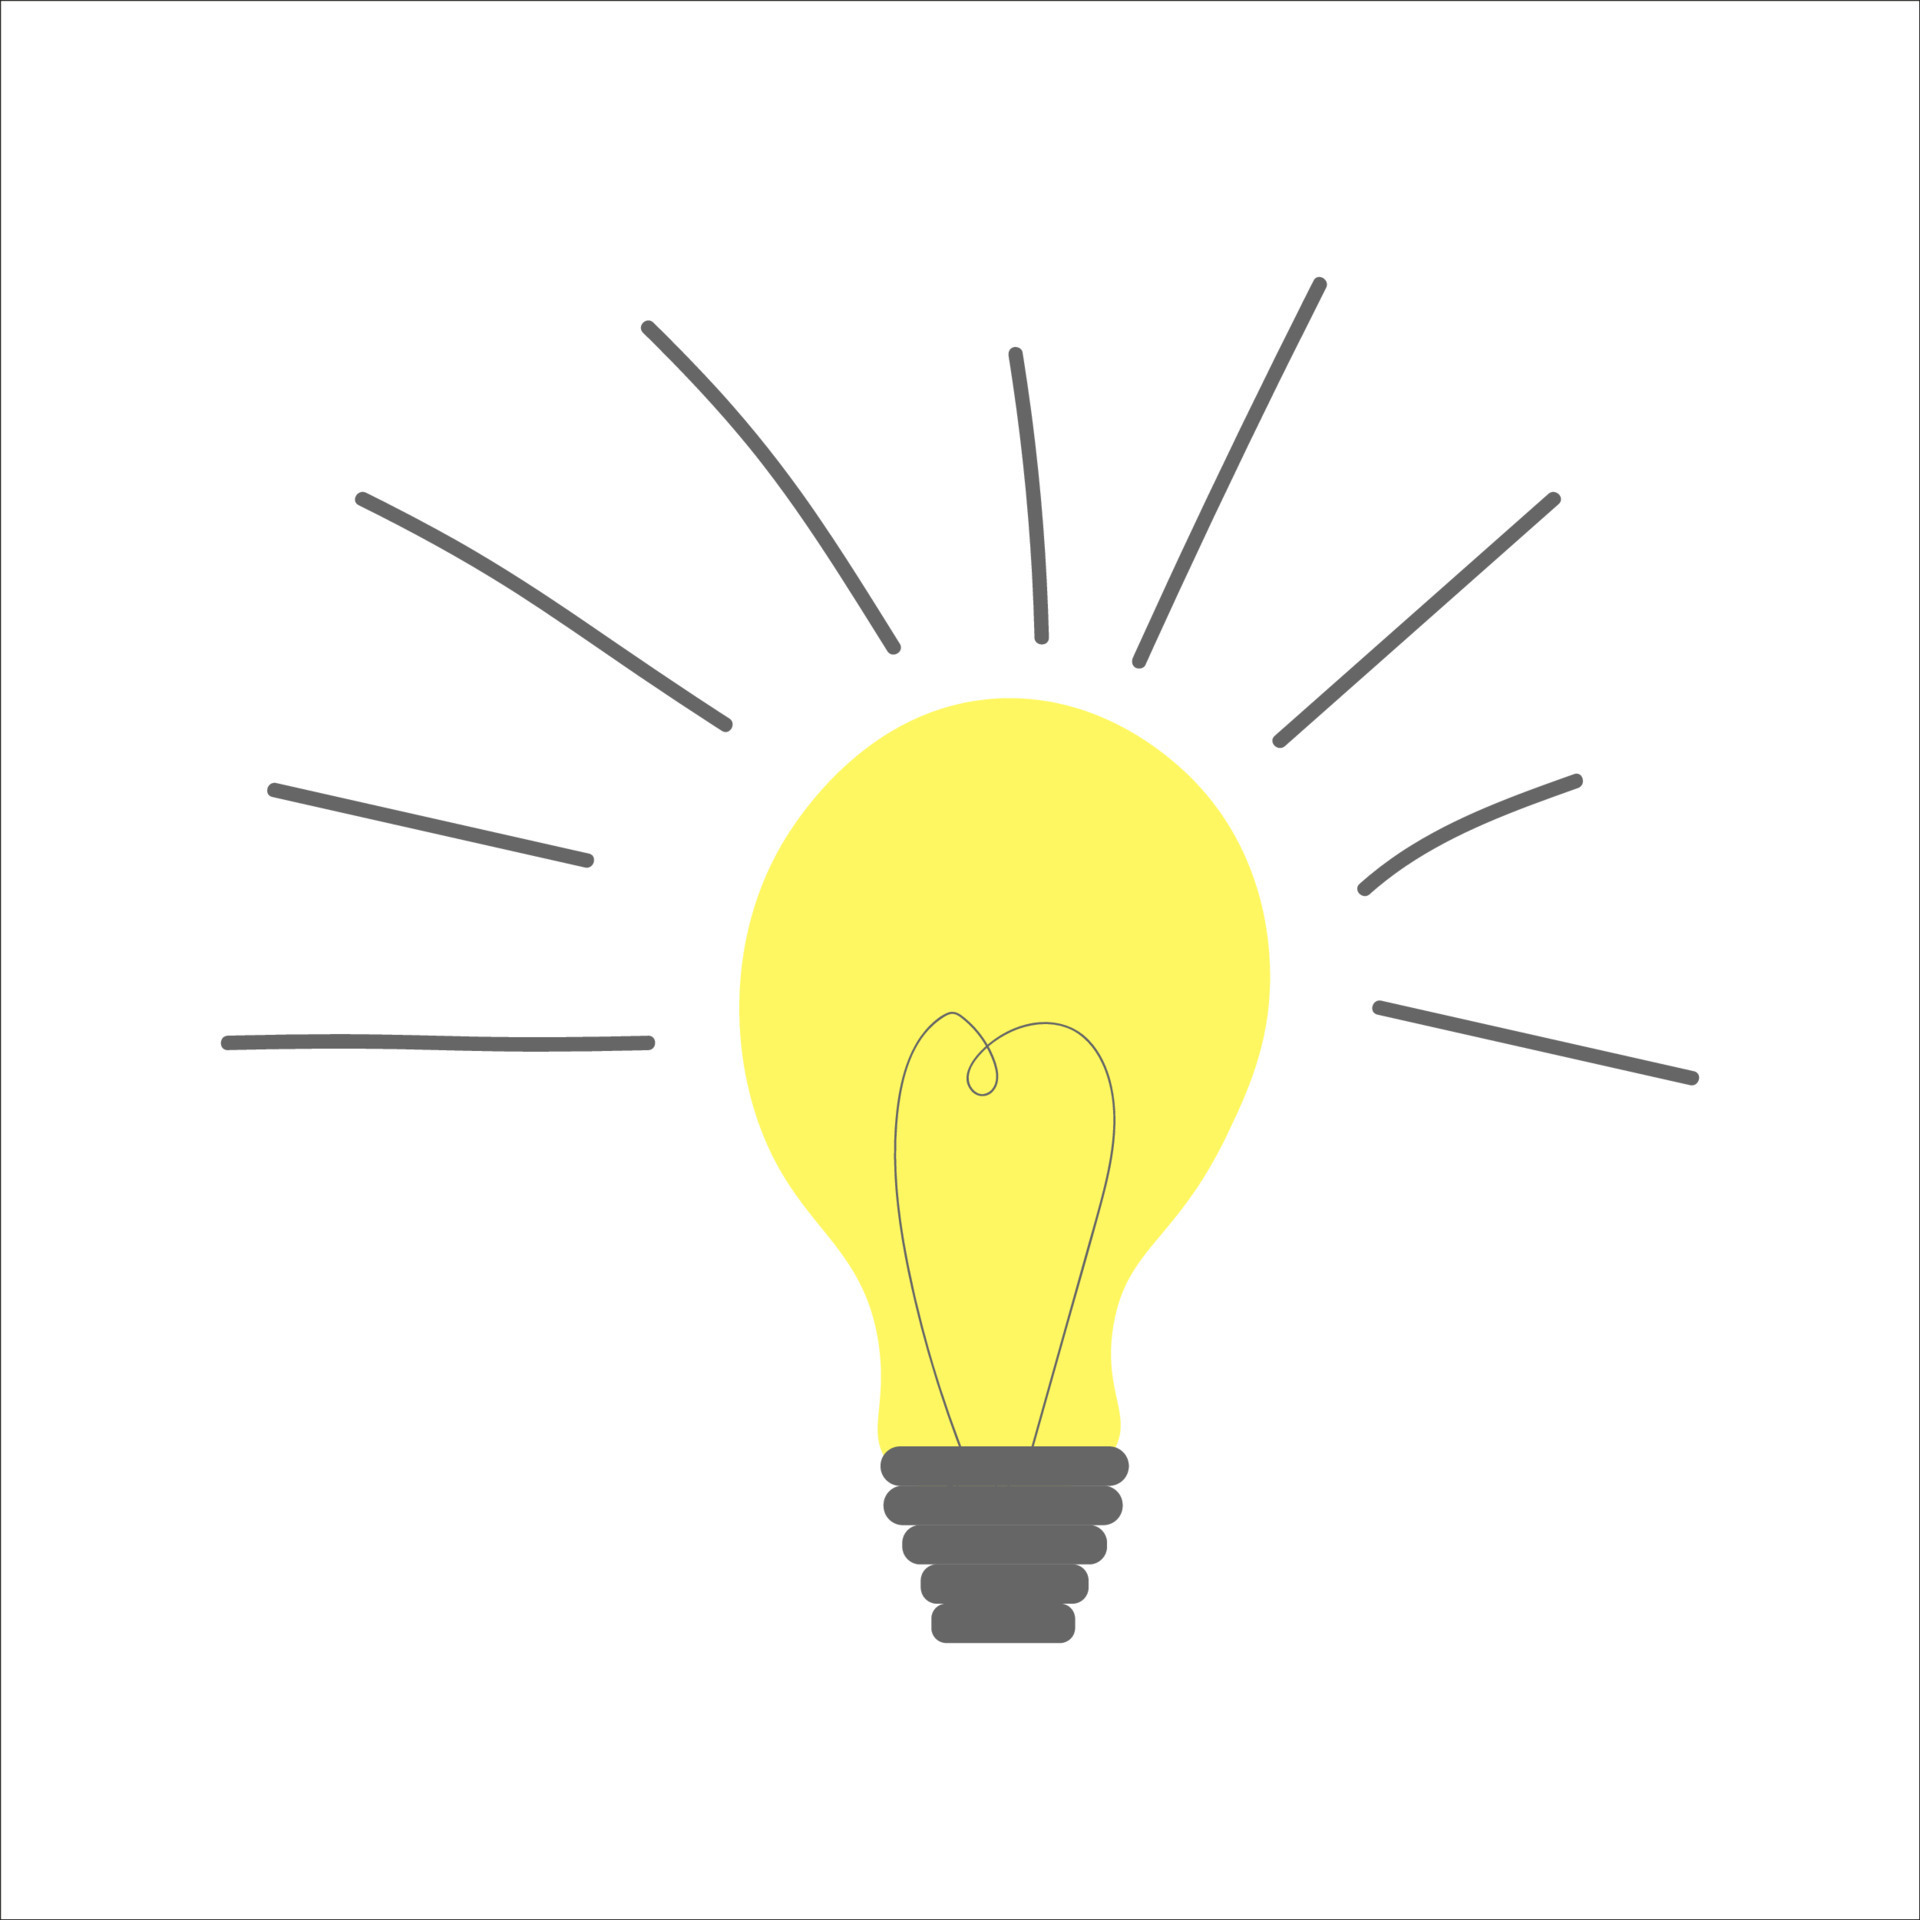 Minimalistic vector illustration of a light bulb lit up, an idea